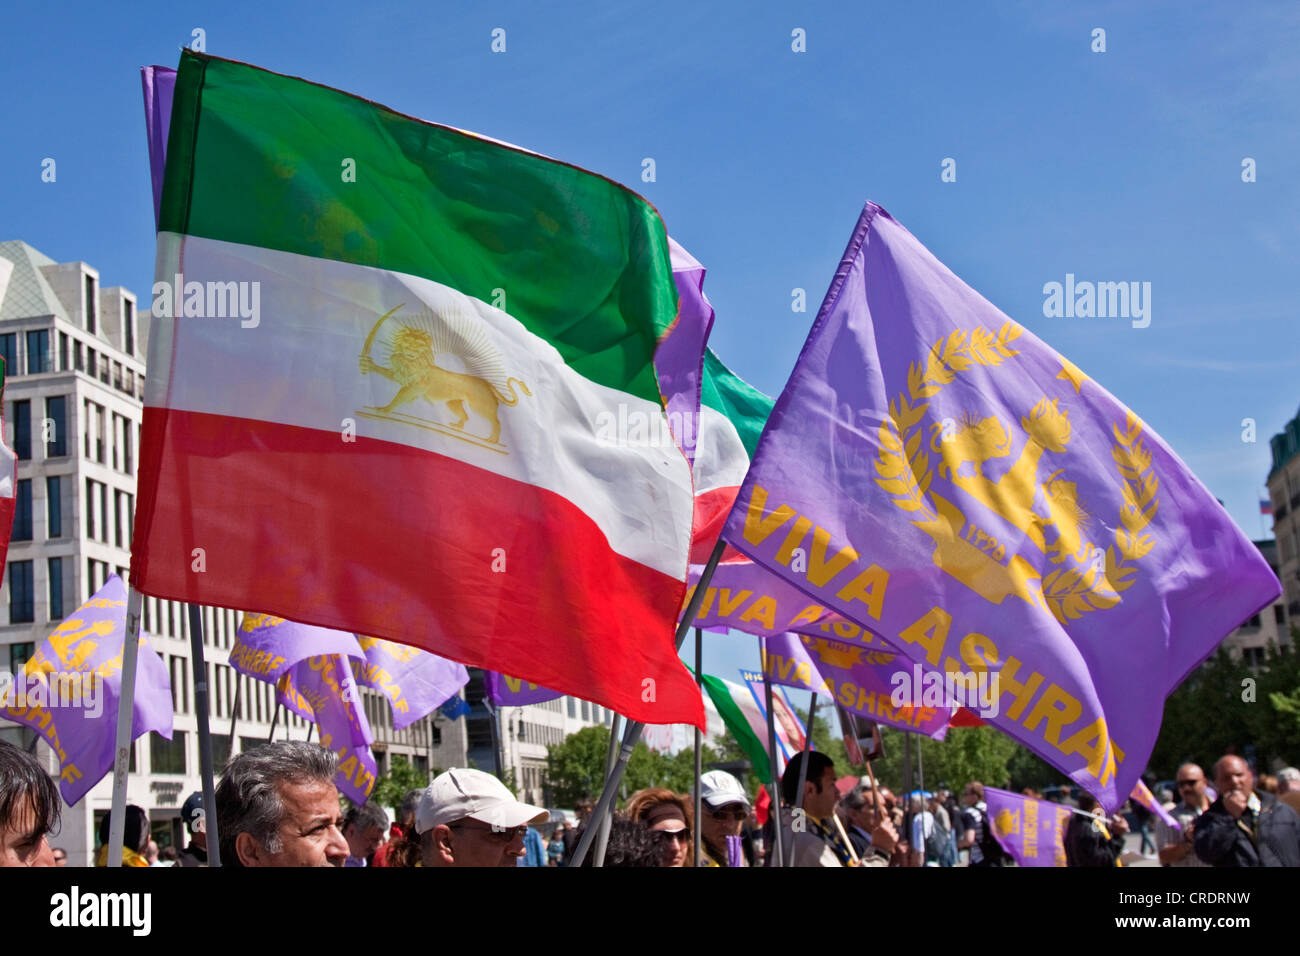 Iranian flag and banner of Ashraf Stock Photo